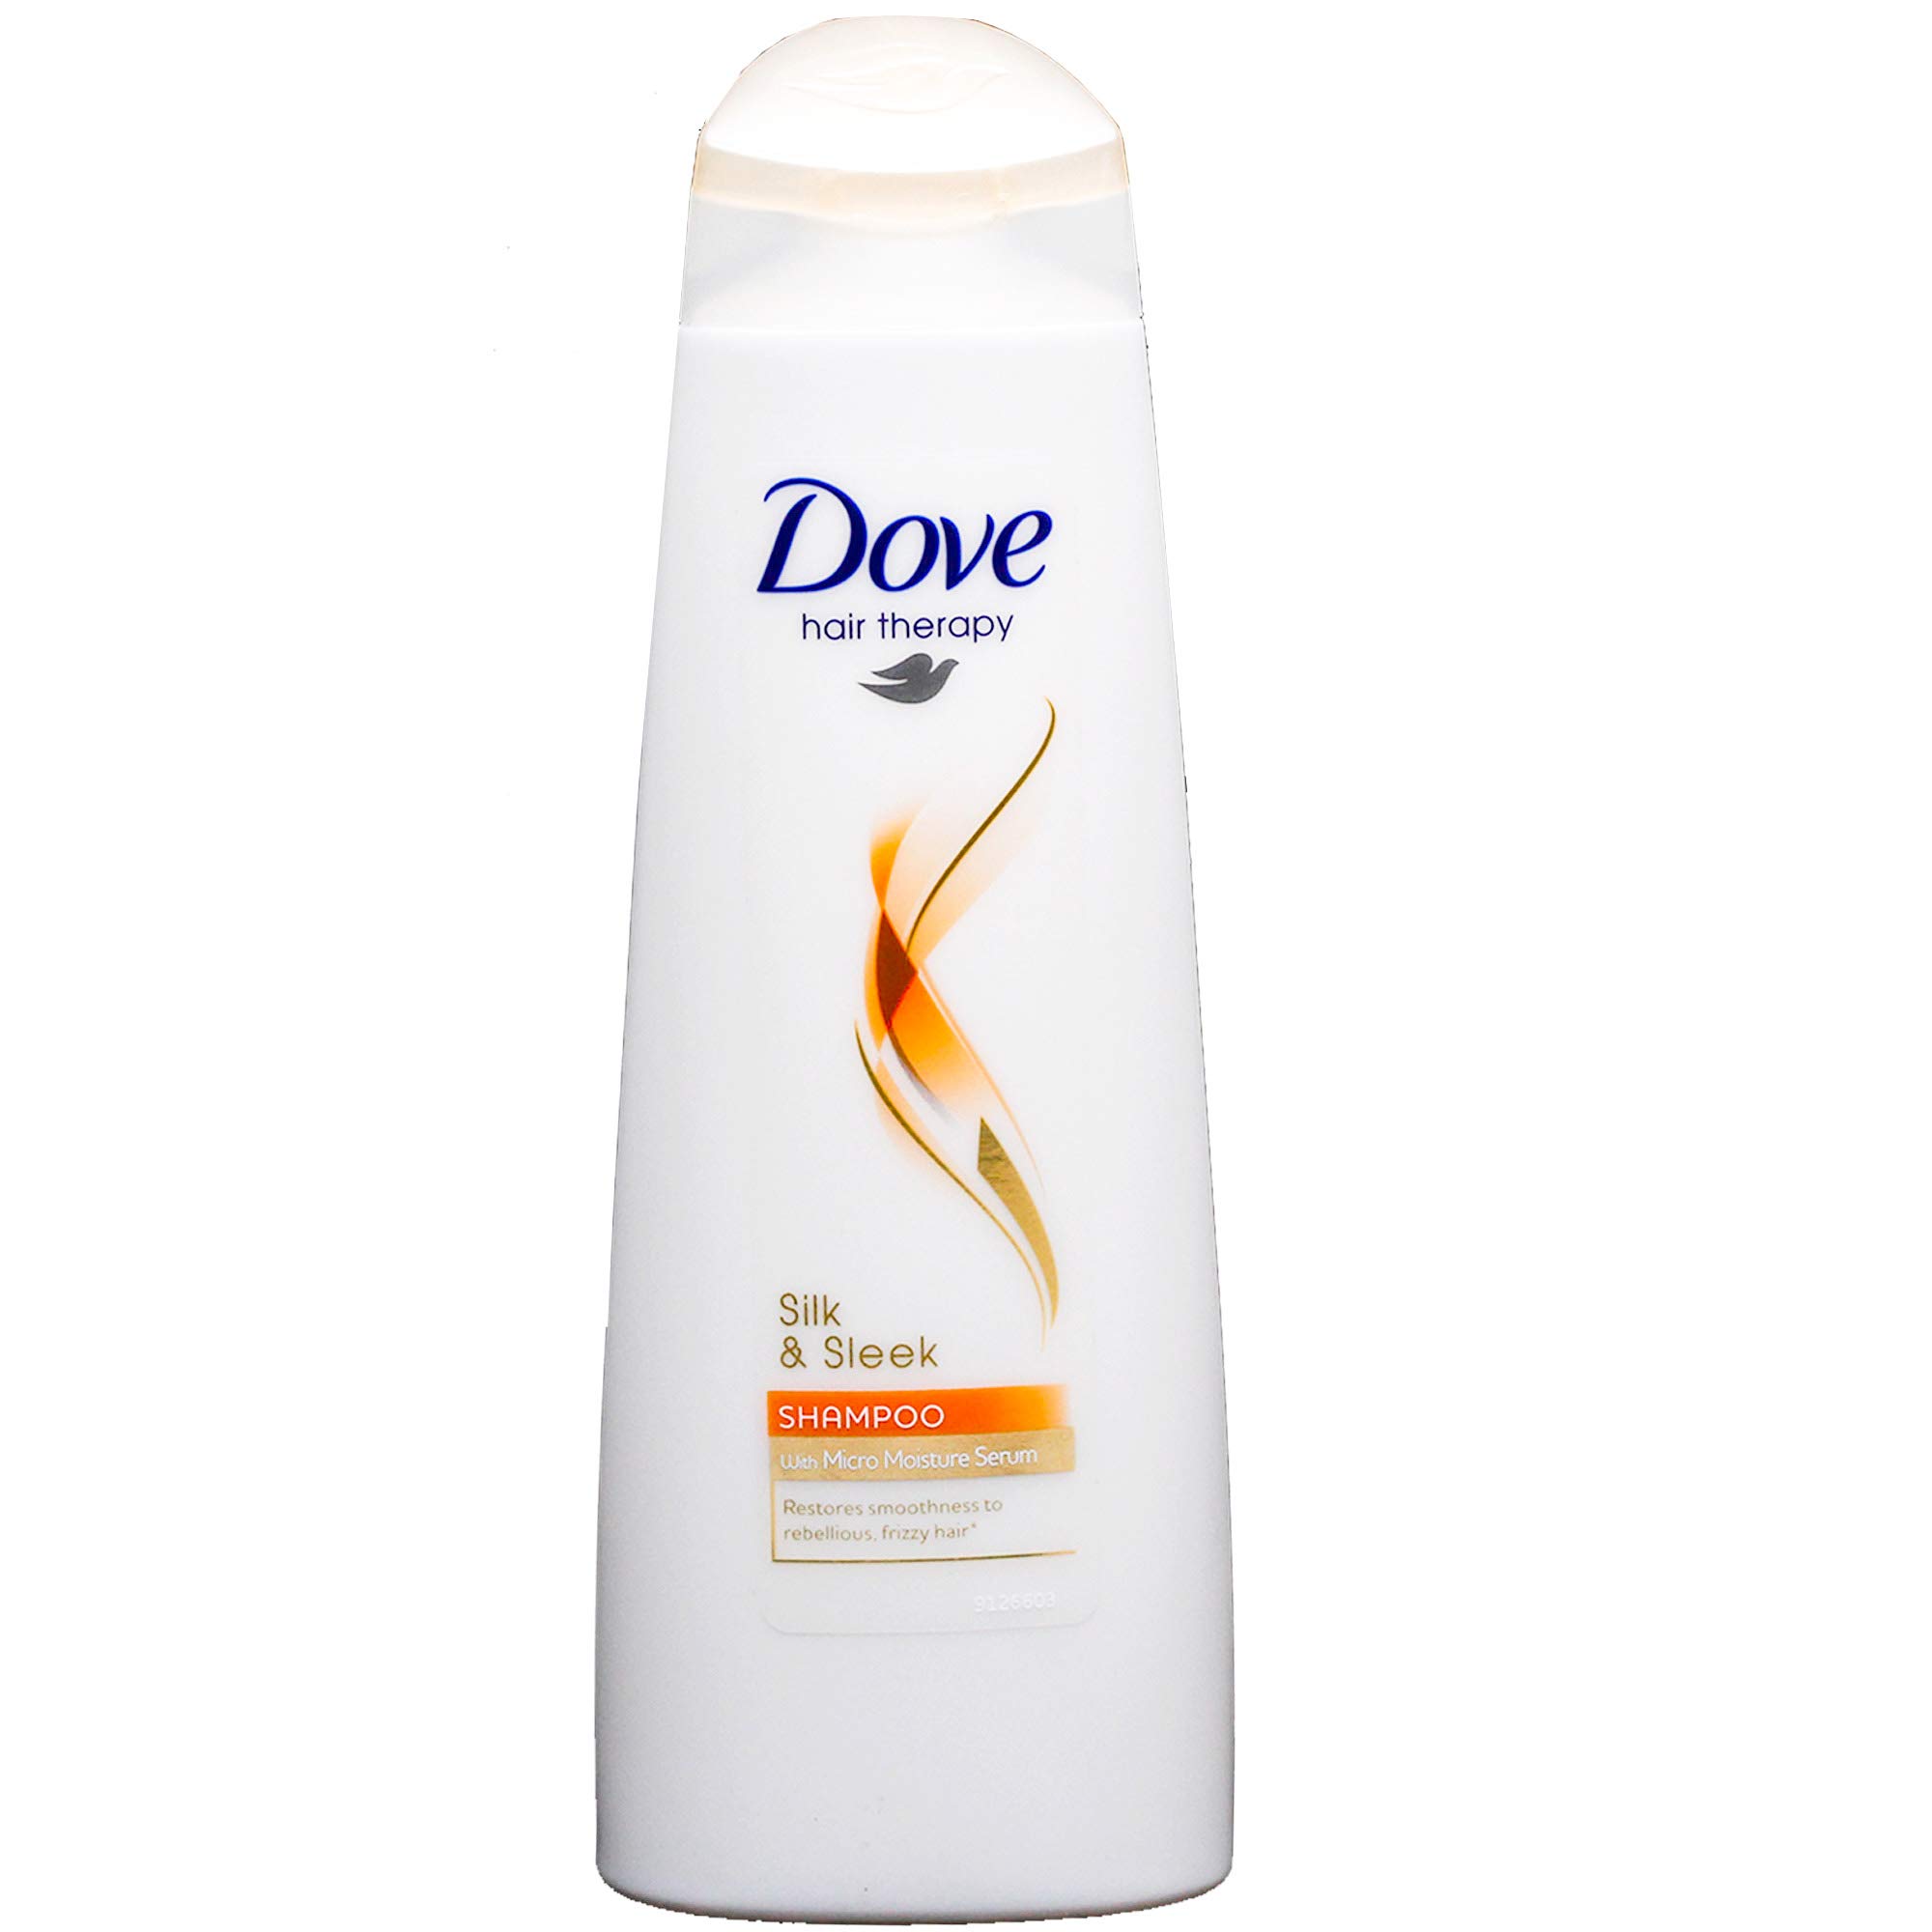 Dove Hair Therapy Shampoo, Silk & Sleek with Micro Moisture Serum